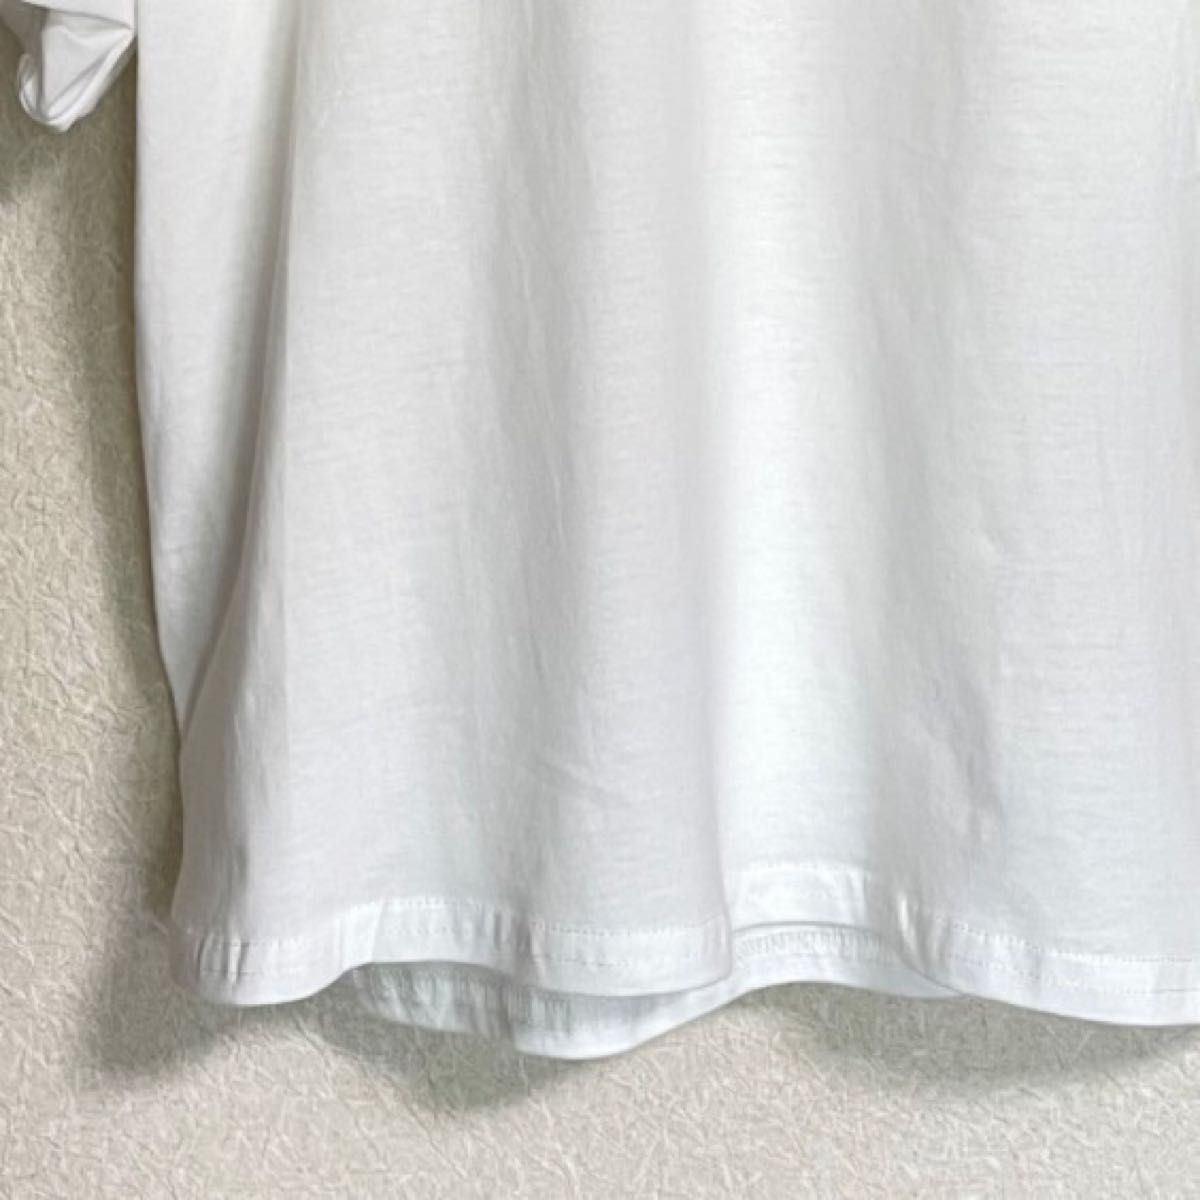 Tシャツ 半袖 バルーン レディース パフスリーブ ボリューム袖 無地 綿 白 ホワイト カットソー コットン